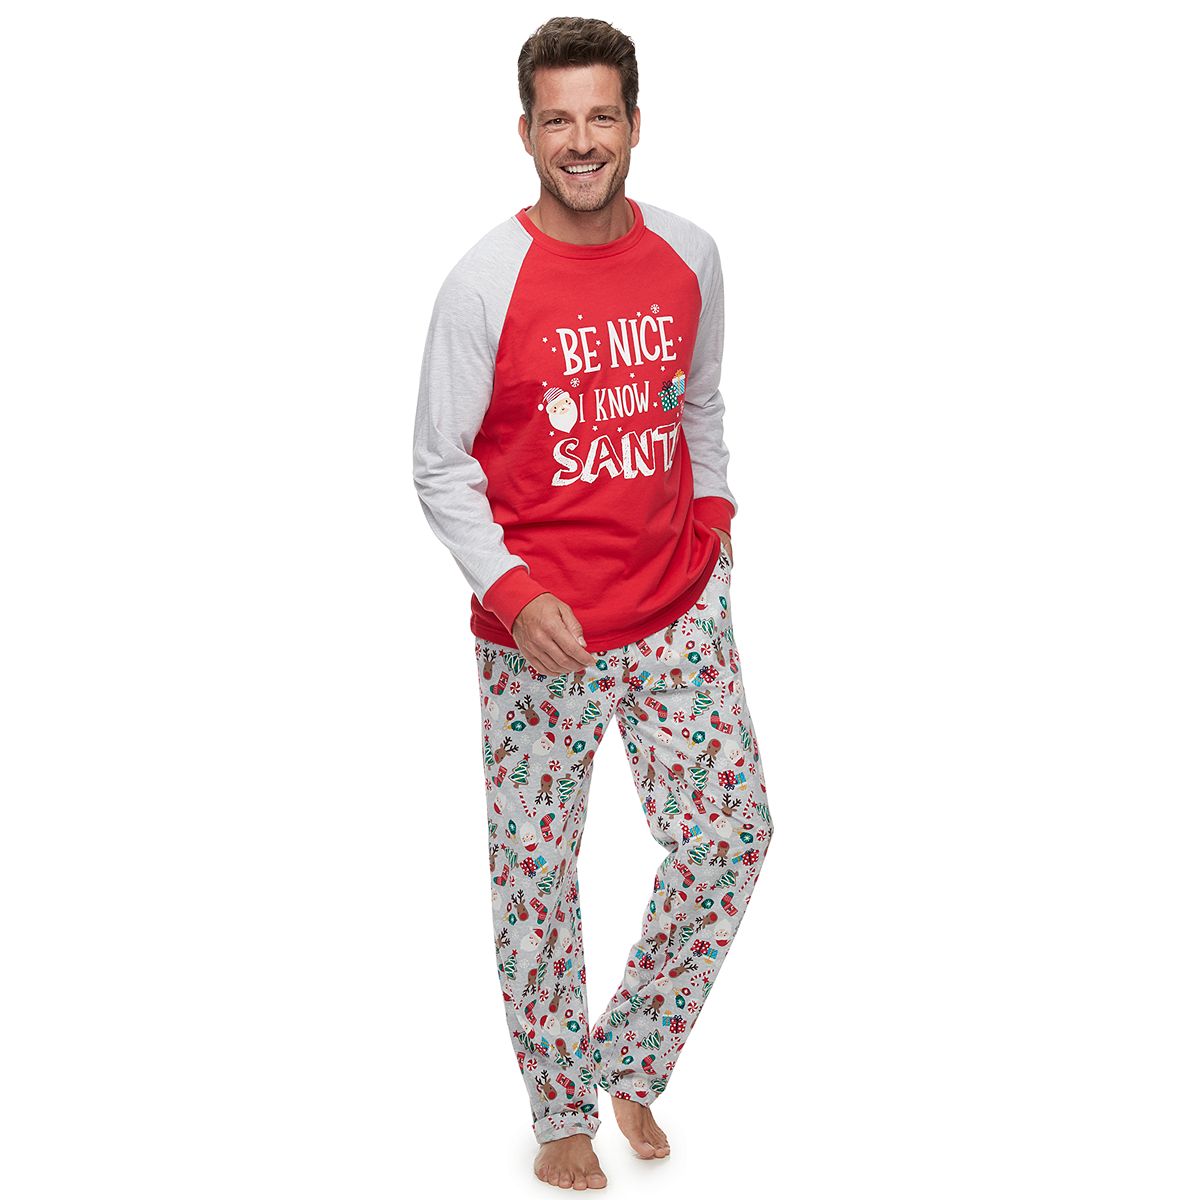 Men's Christmas Sleepwear Shop for Festive Clothing for